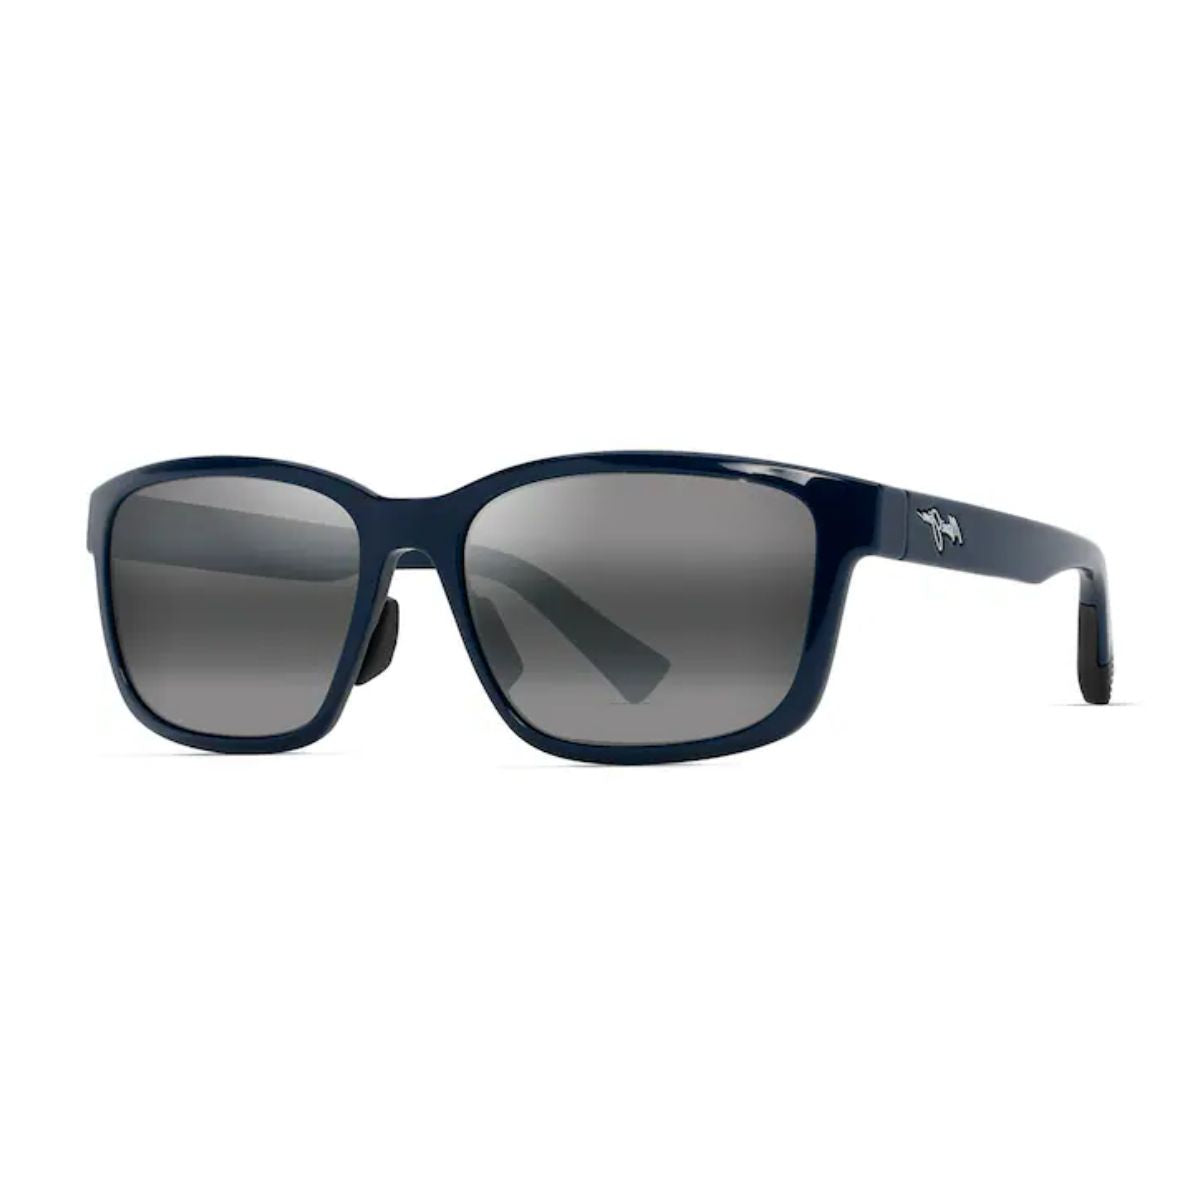 "Buy Stylish Lehiwa Maui Jim Sunglasses For Men's | Discounted Maui Jim Polarized Sunglasses At Optorium"